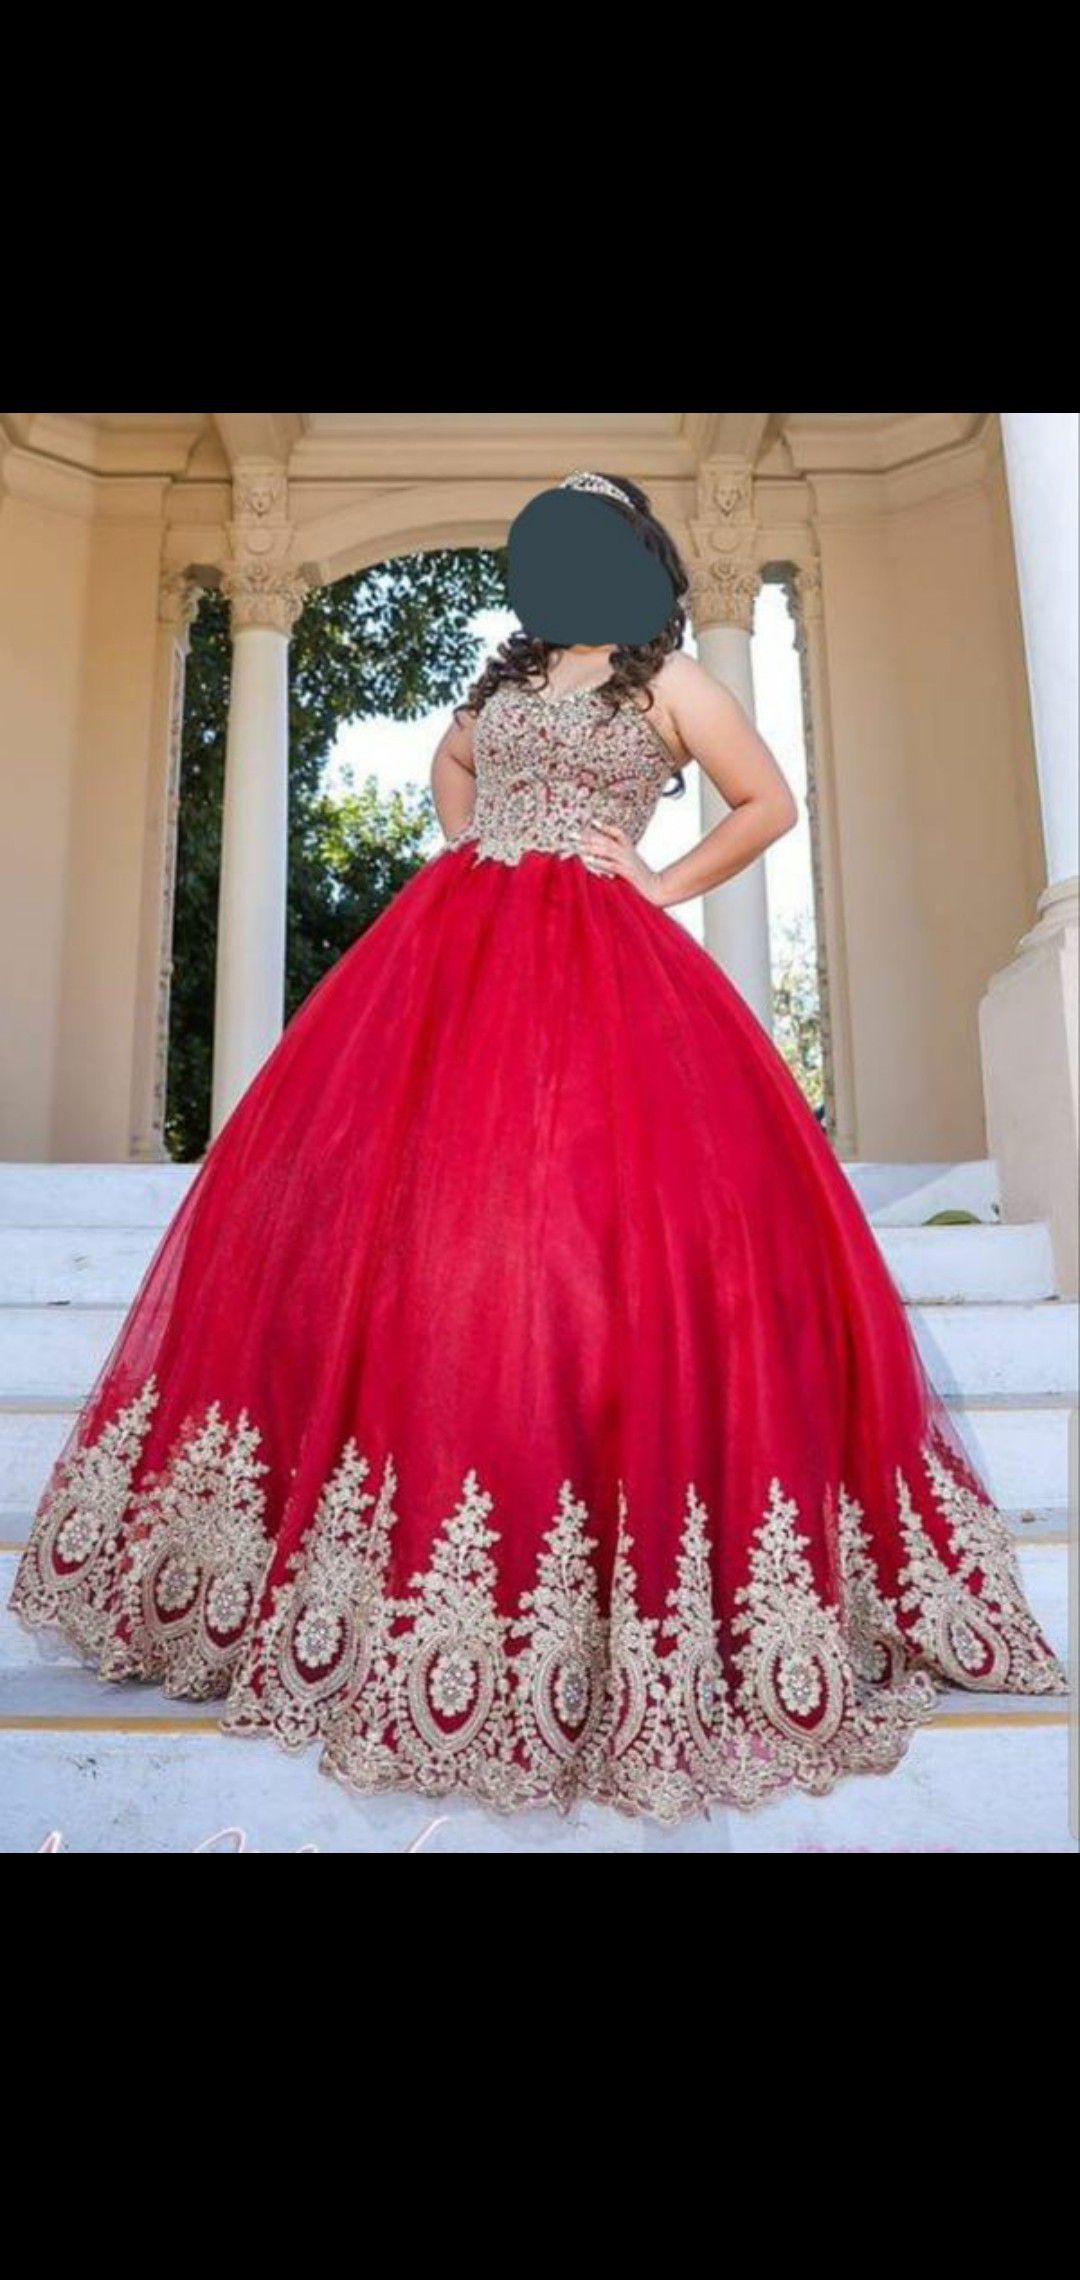 Quinceanera dress with petticoat